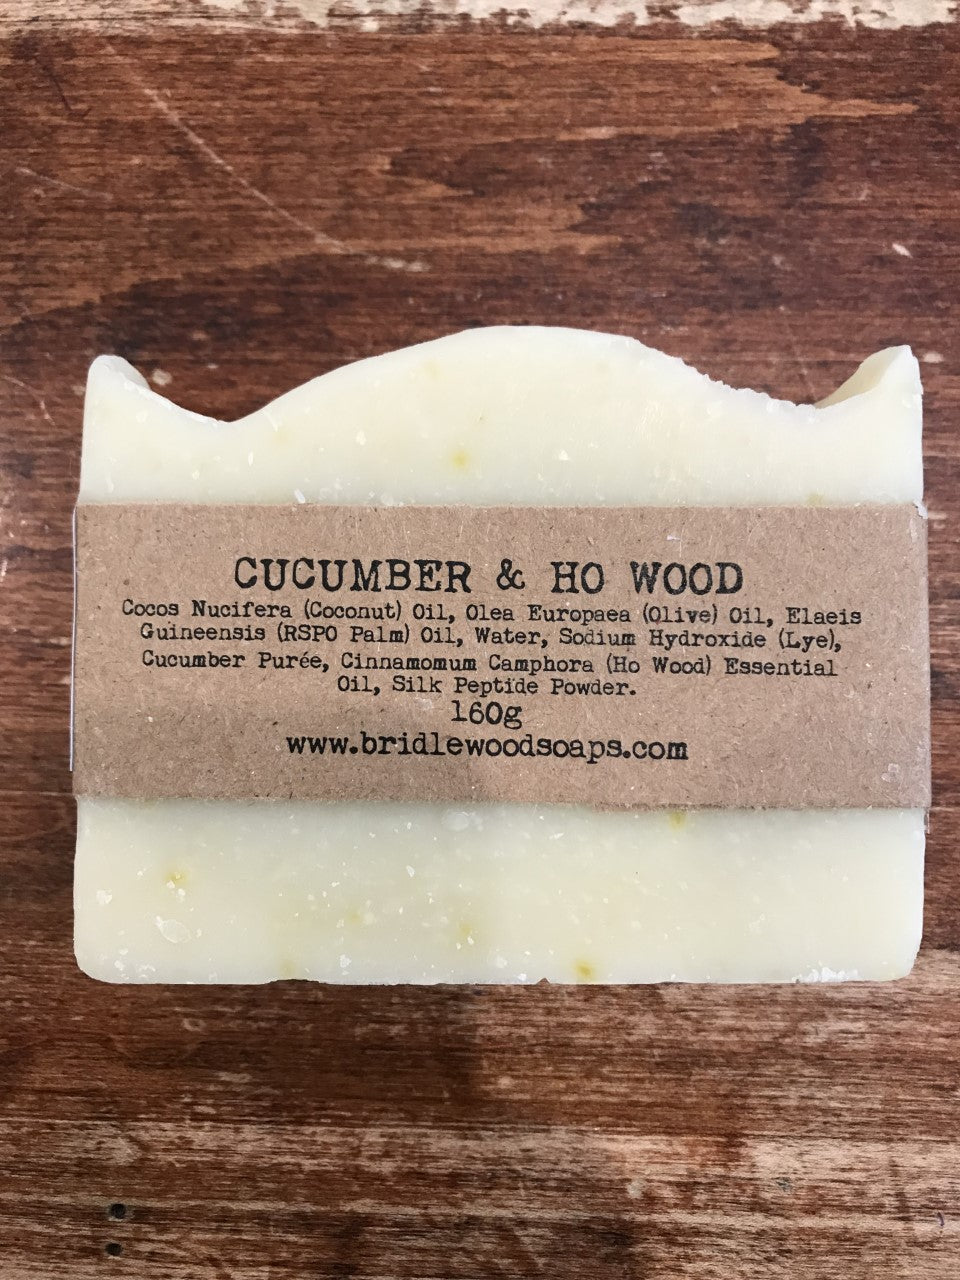 Bridlewood Soaps Cucumber and Ho Wood Bar Soap